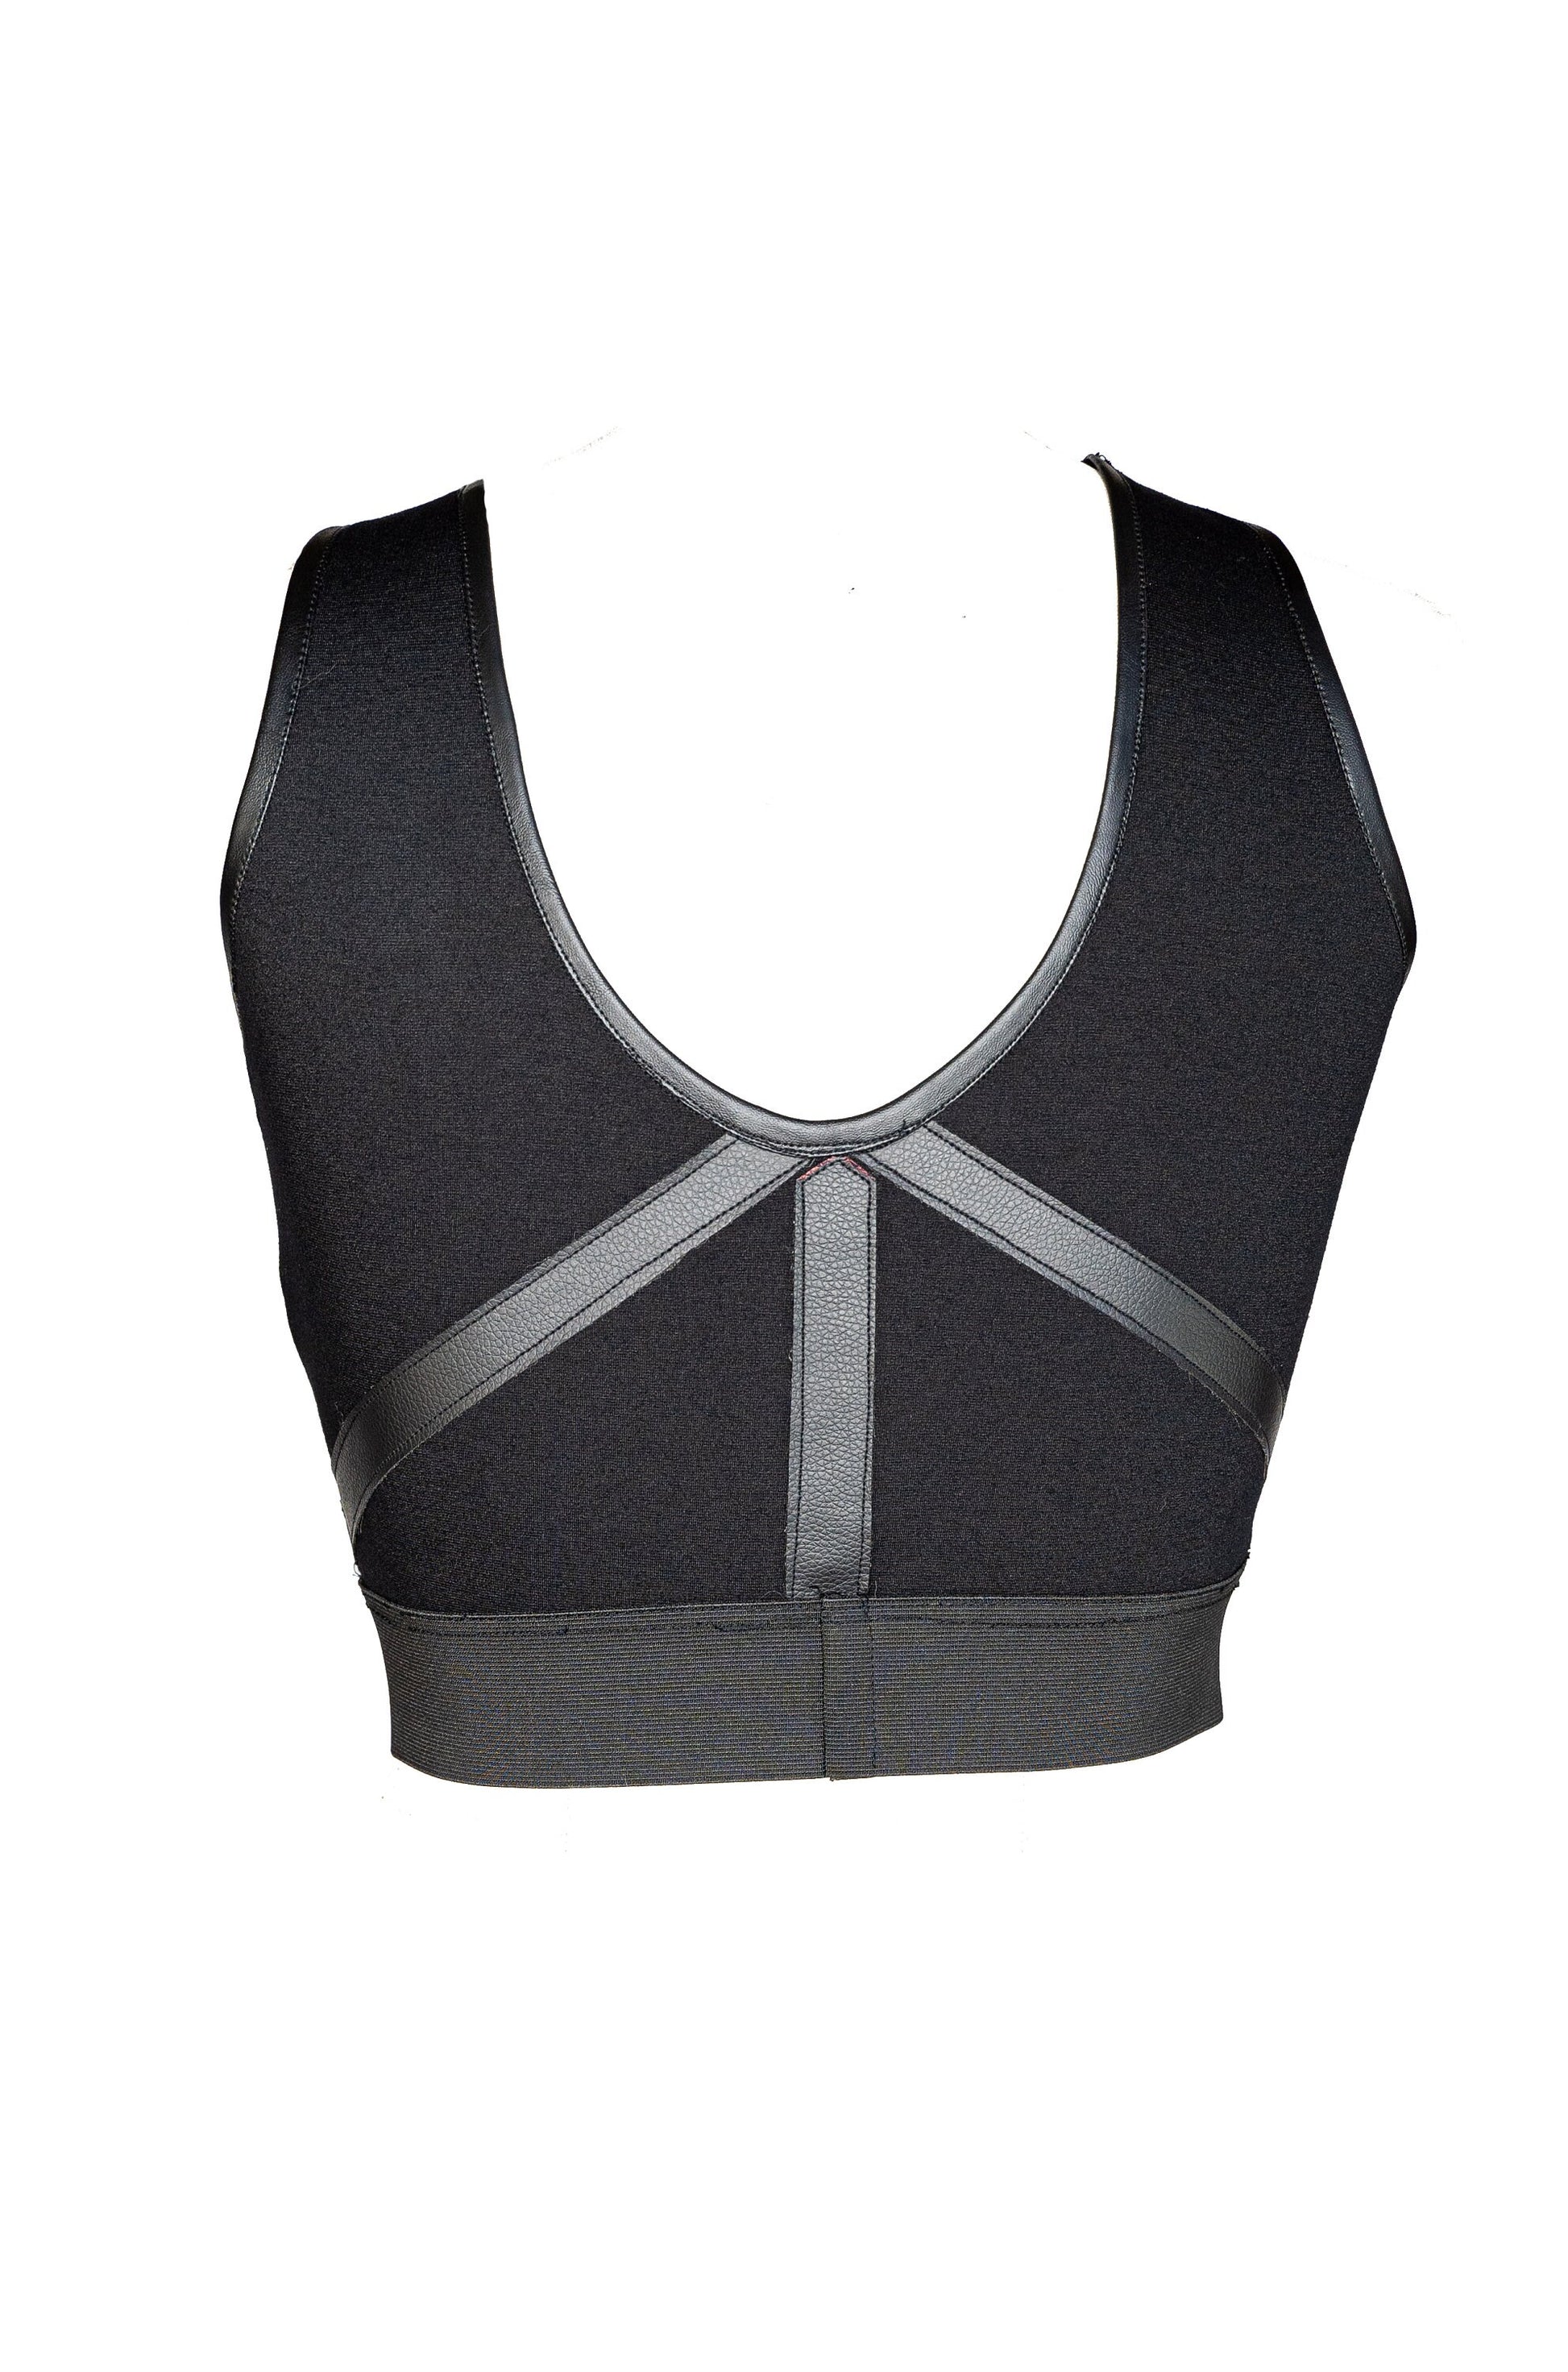 Leather harness laser engraved crop top sports bra – Agoraphobix